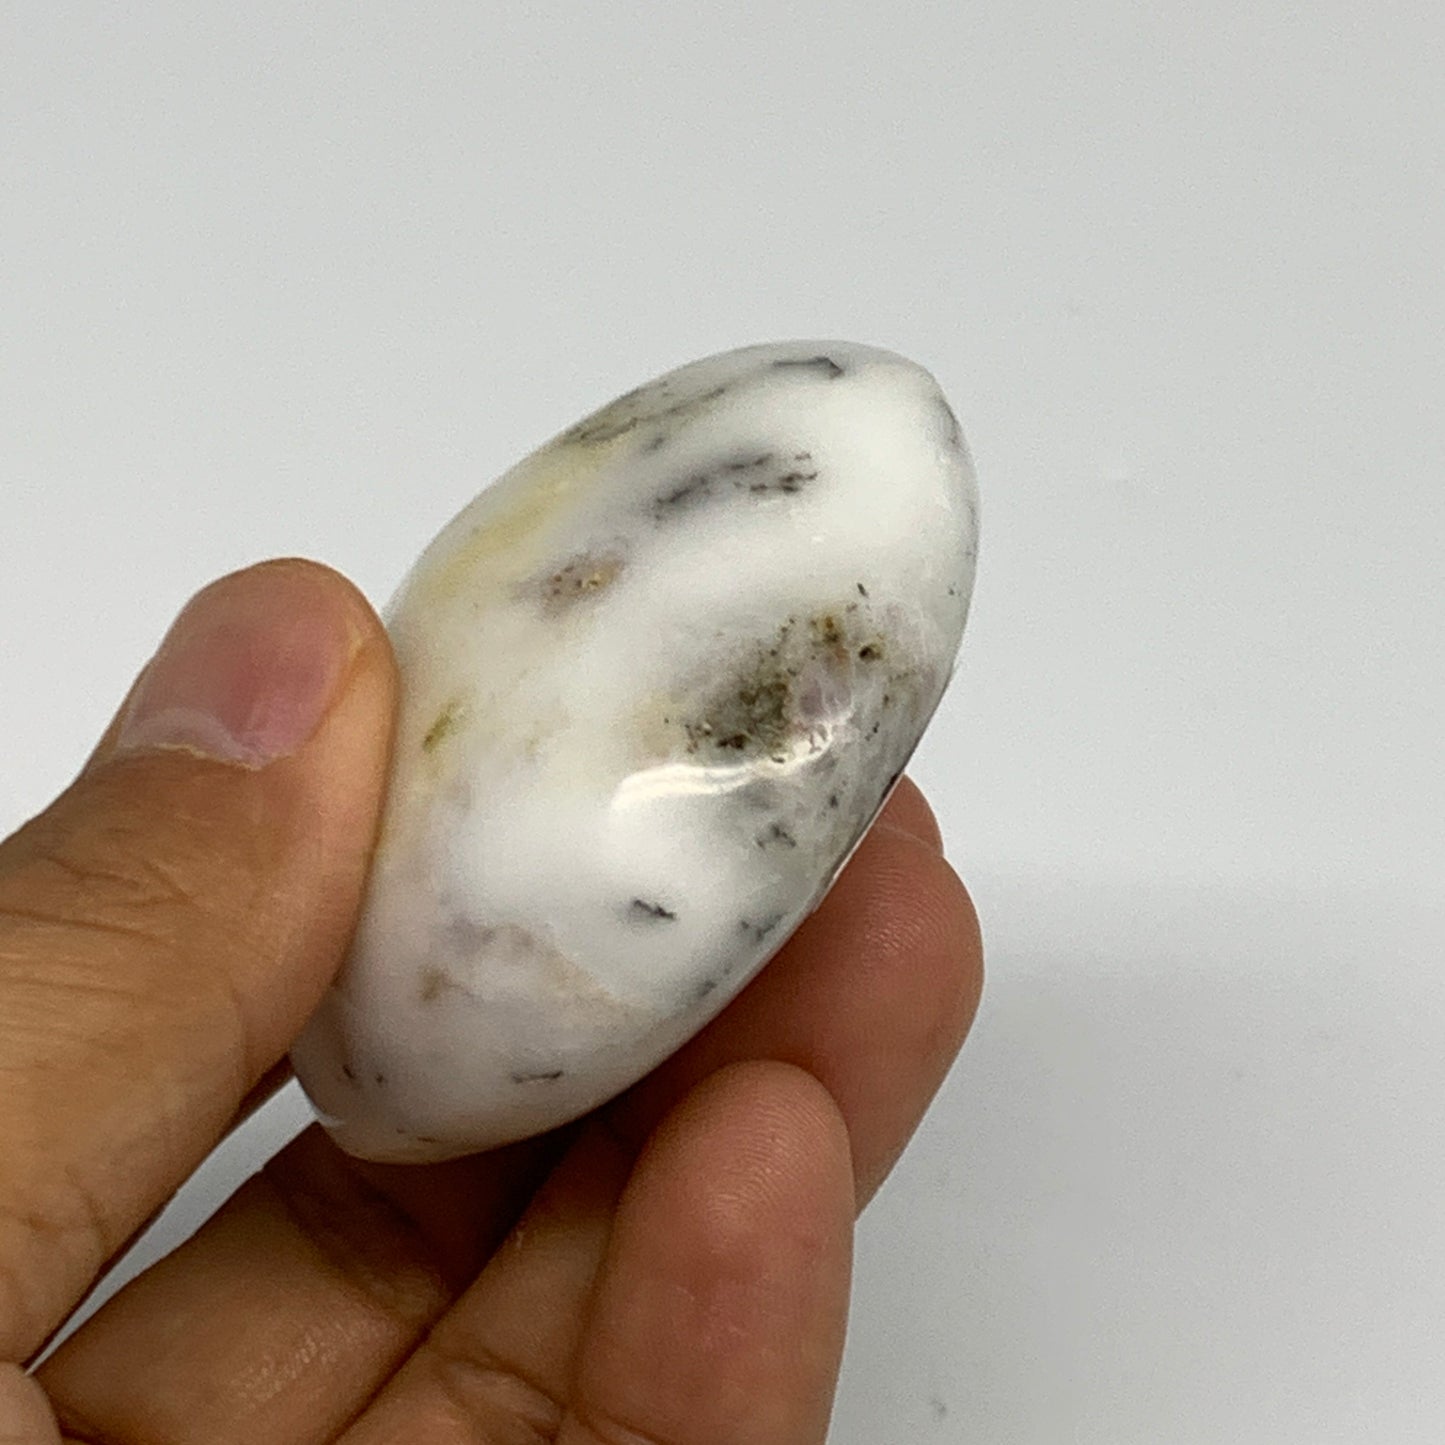 86.8g, 2.2"x2.1"x1", Dendrite Opal Palm-Stone Reiki Energy Crystal, B27829